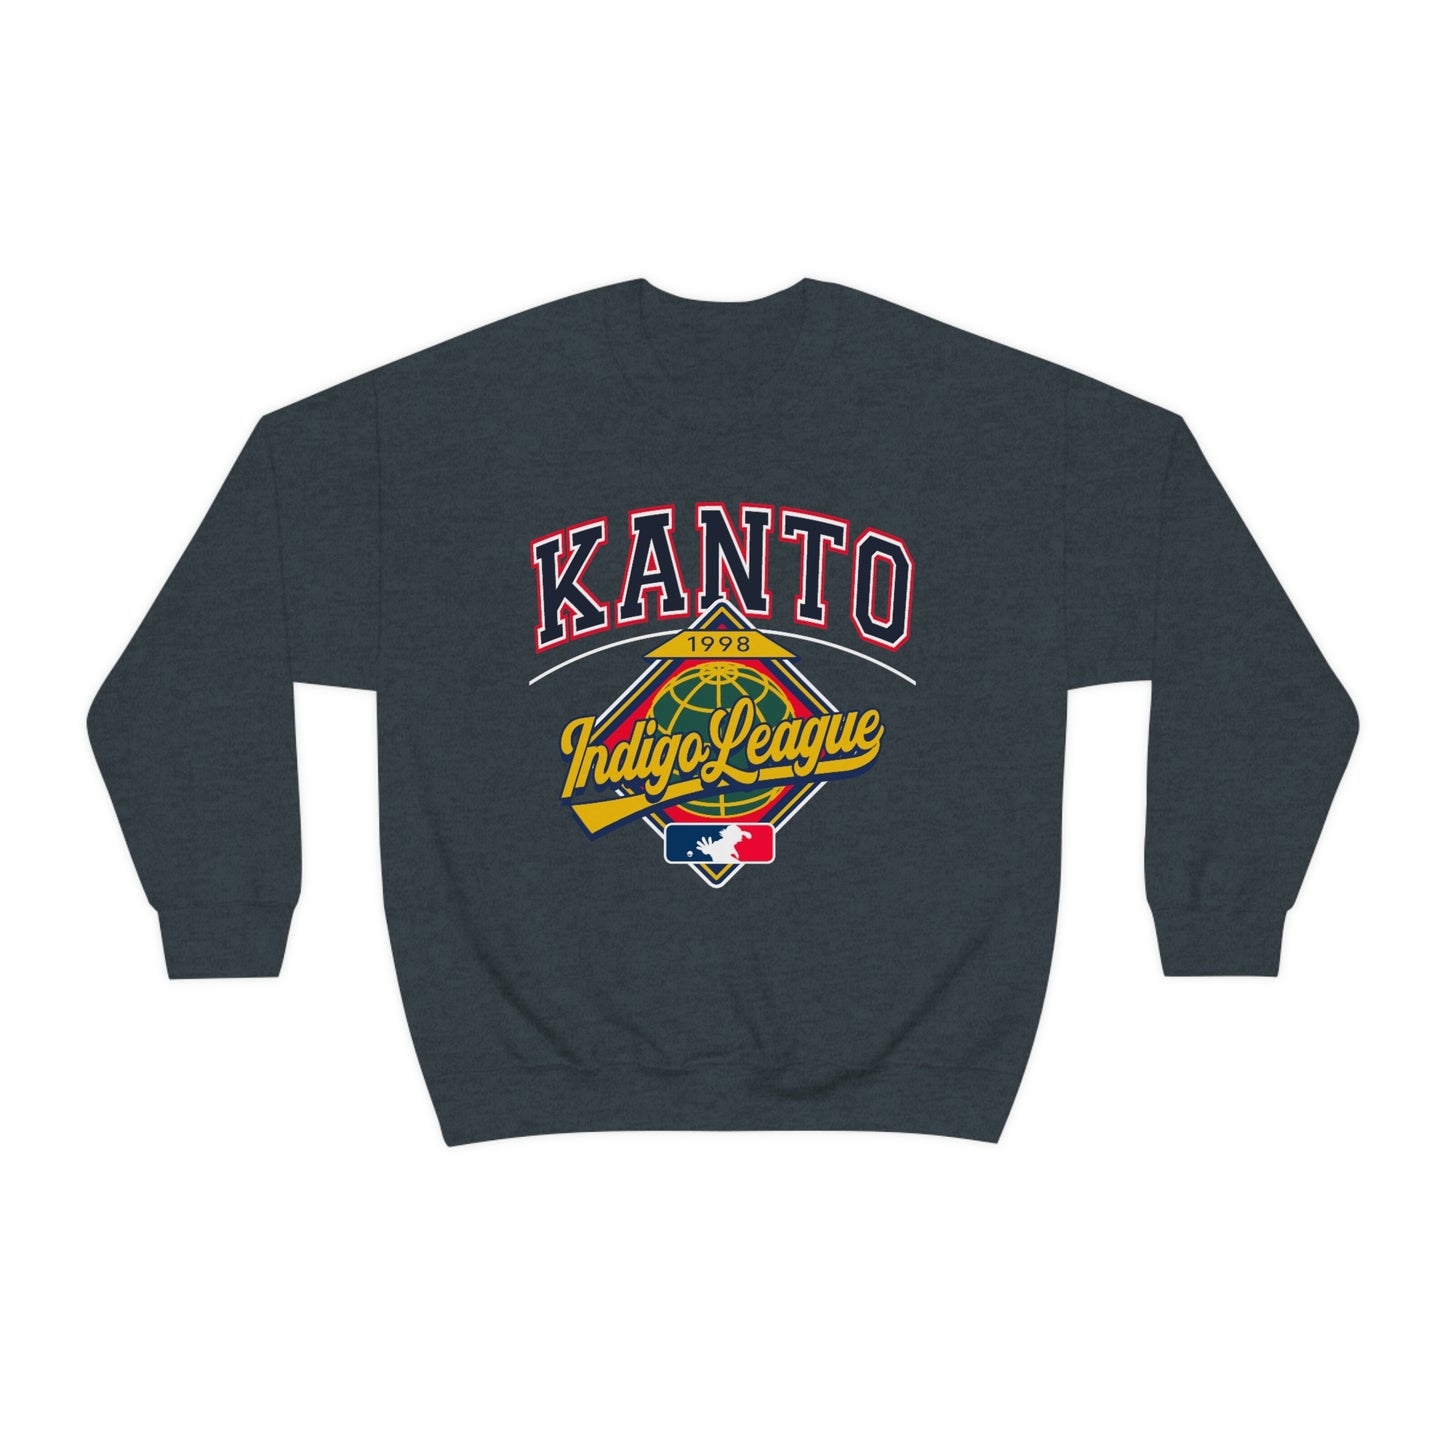 Kanto Champ University sweatshirt College shirt Crewneck Regions Baseball world series inspired